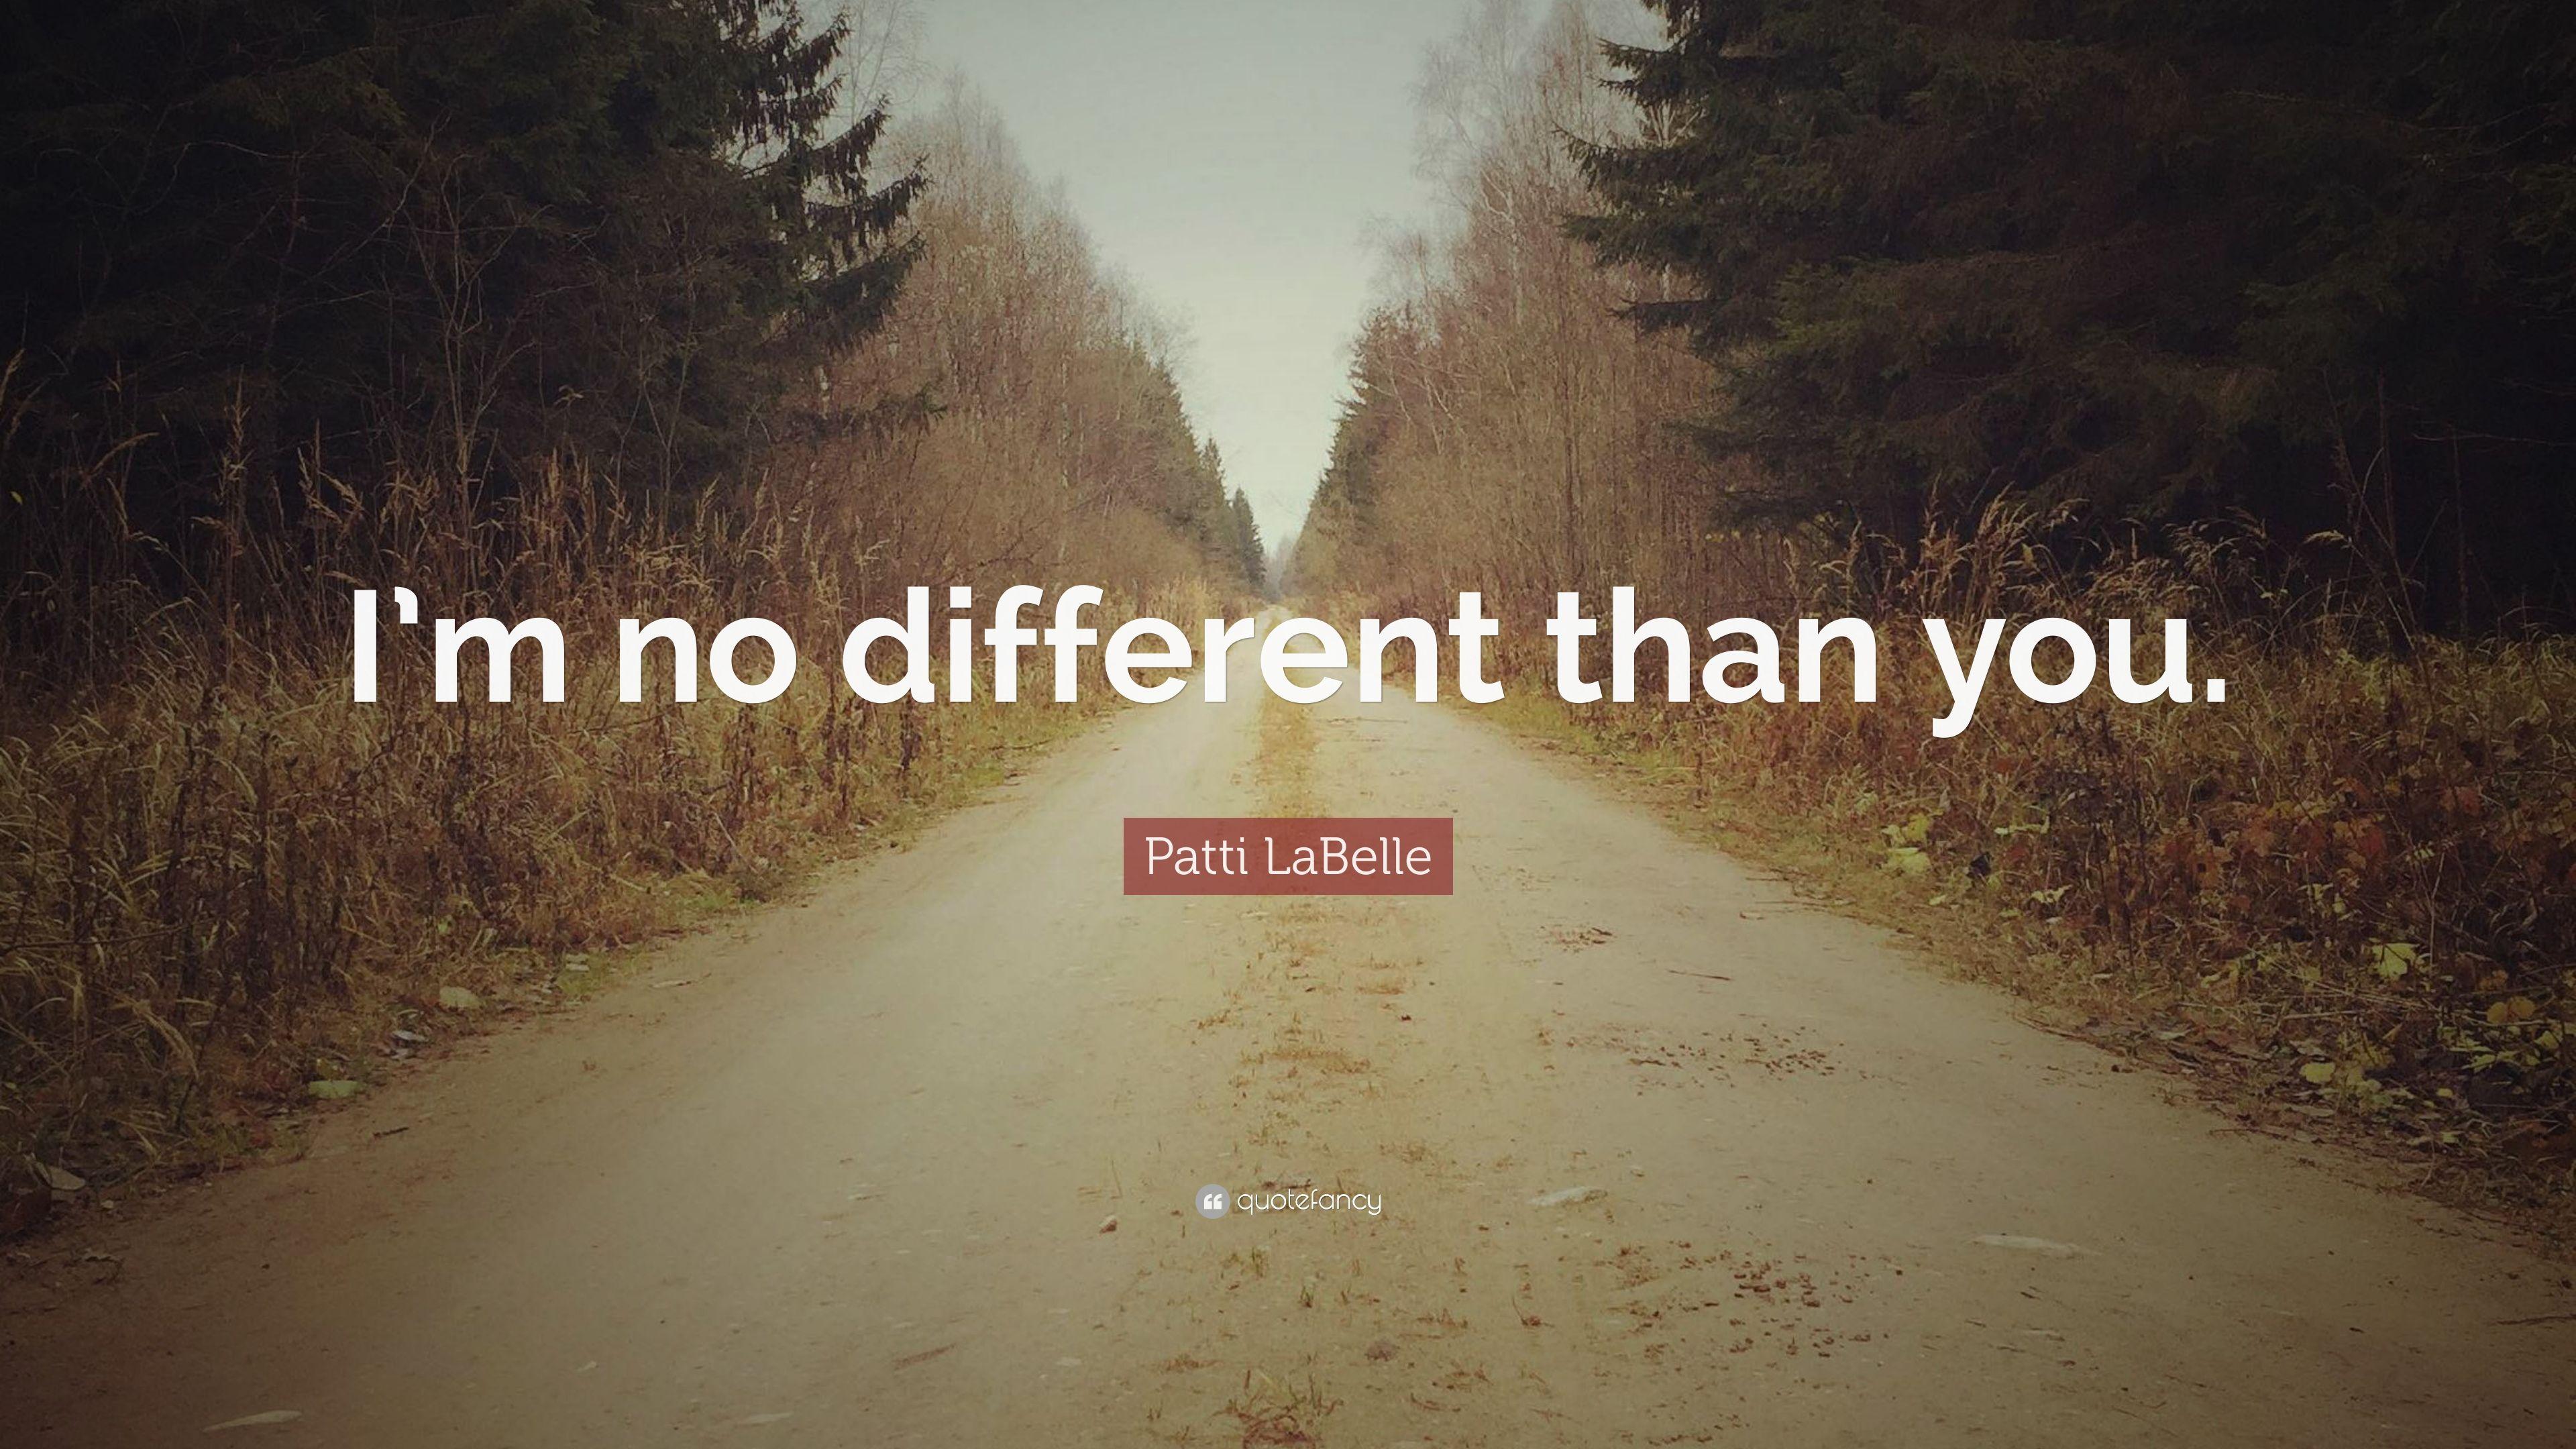 Patti LaBelle Quote: “I'm no different than you.” 7 wallpaper